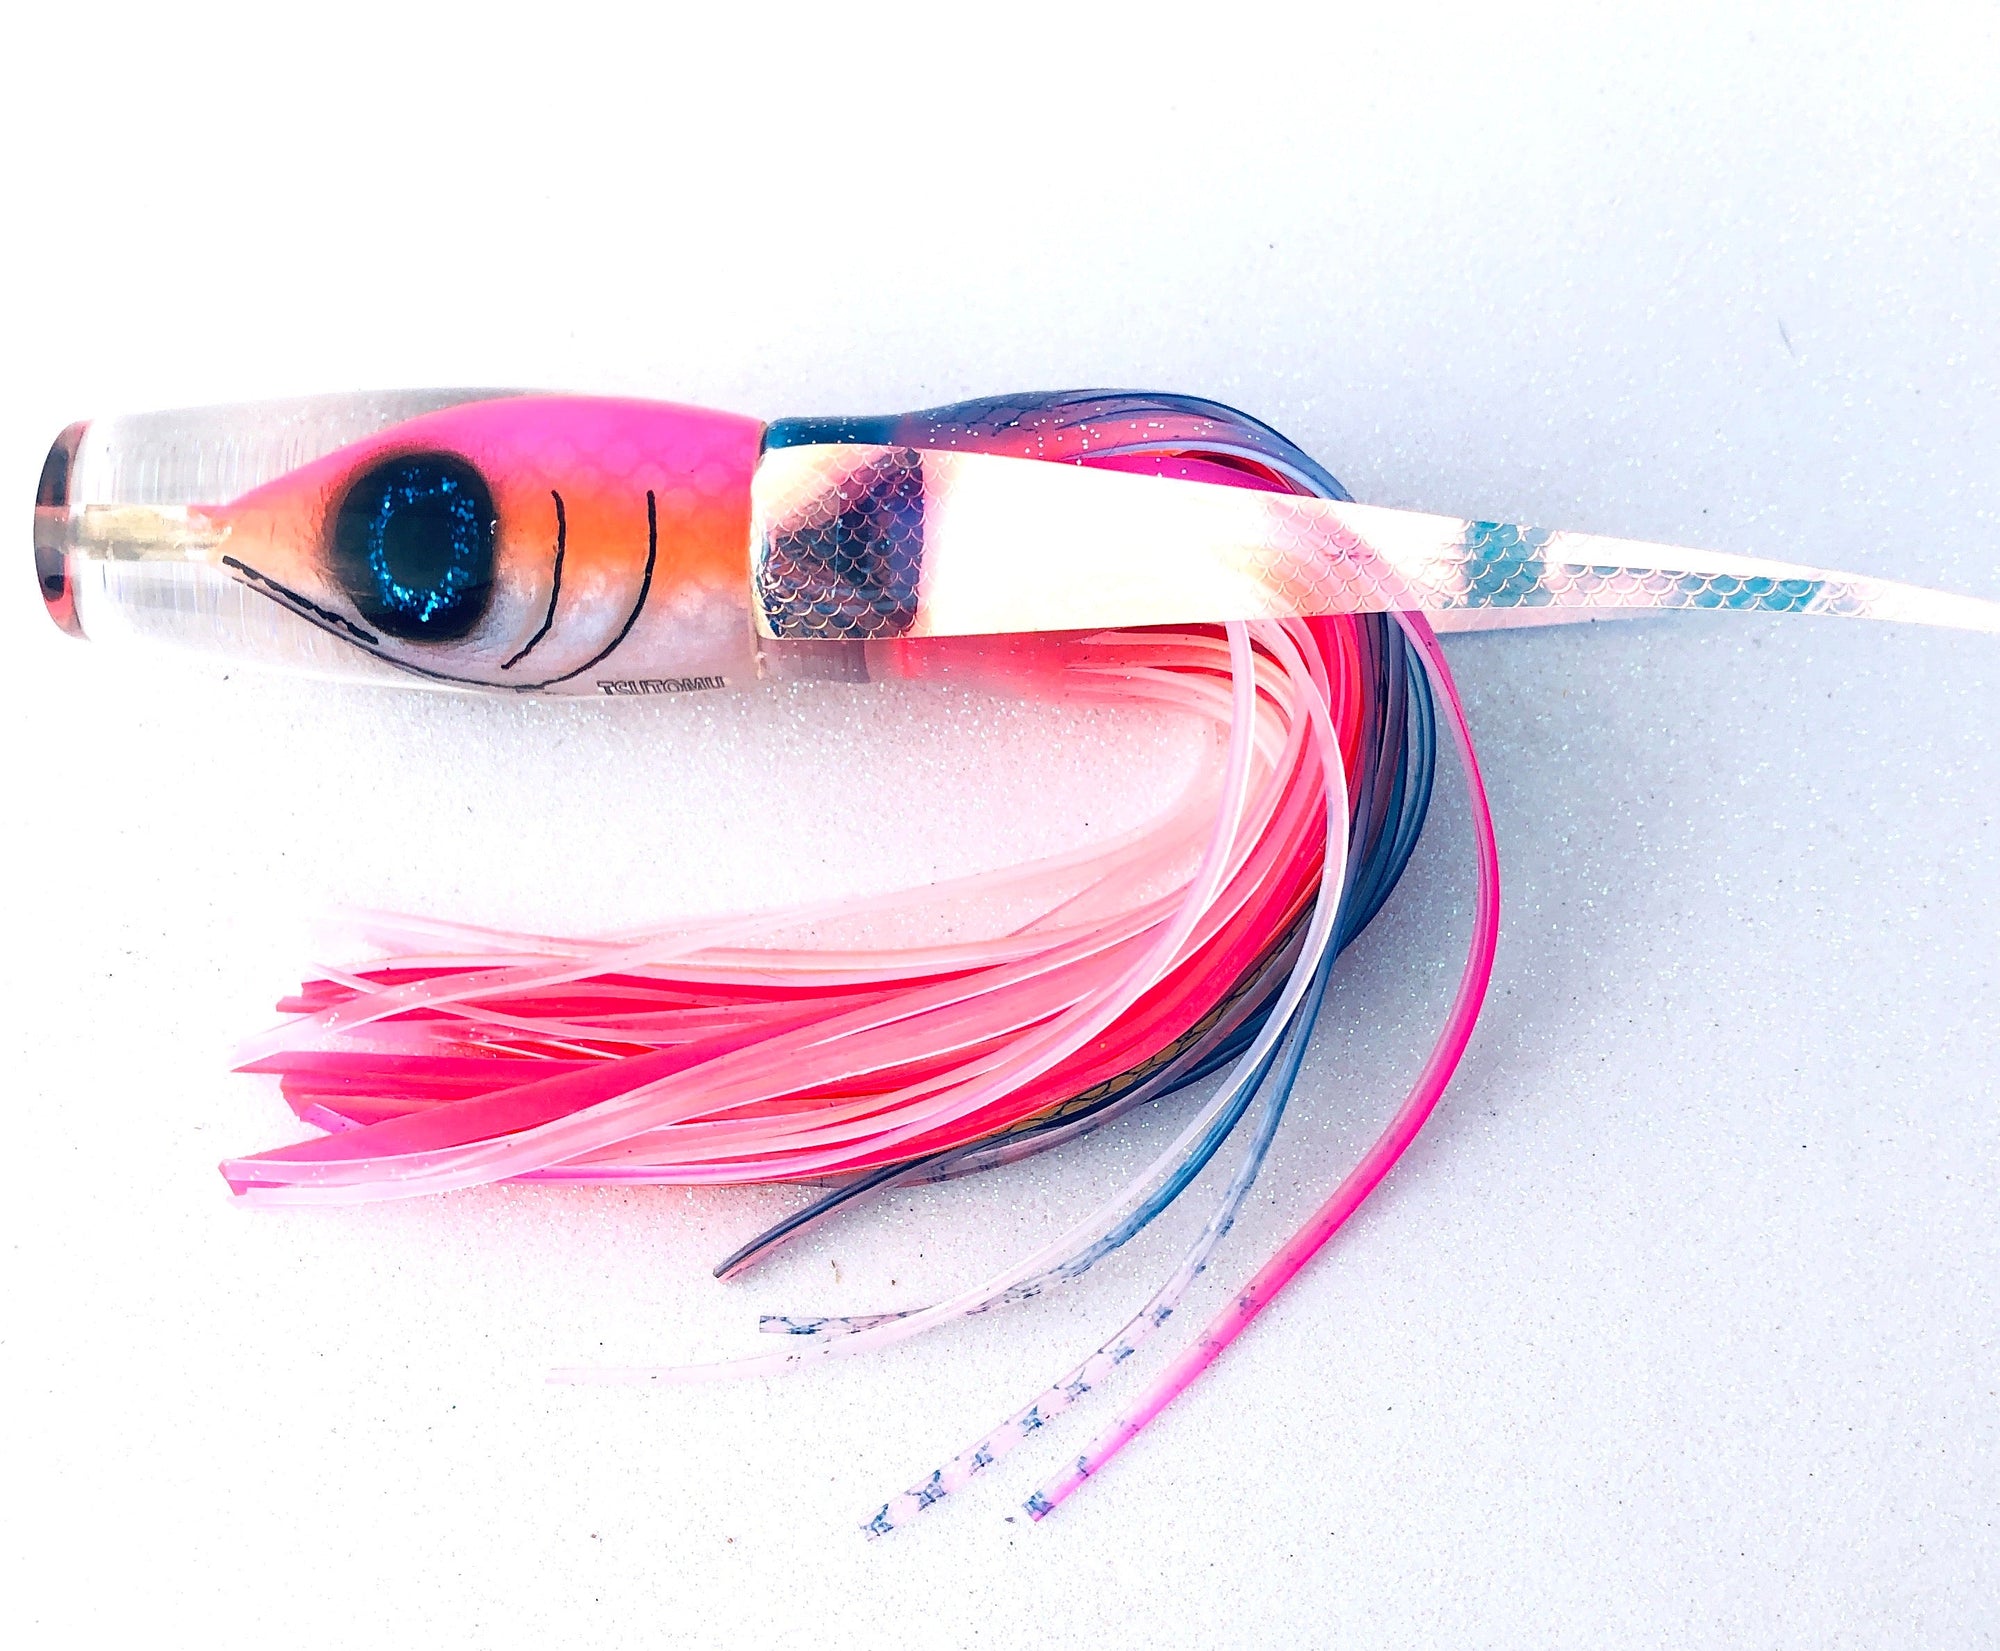 Tsutomu Lures-Tsutomu Lures HI DA Amaebi Pink 10 inch Invert - Skirted New Like New-New Lures